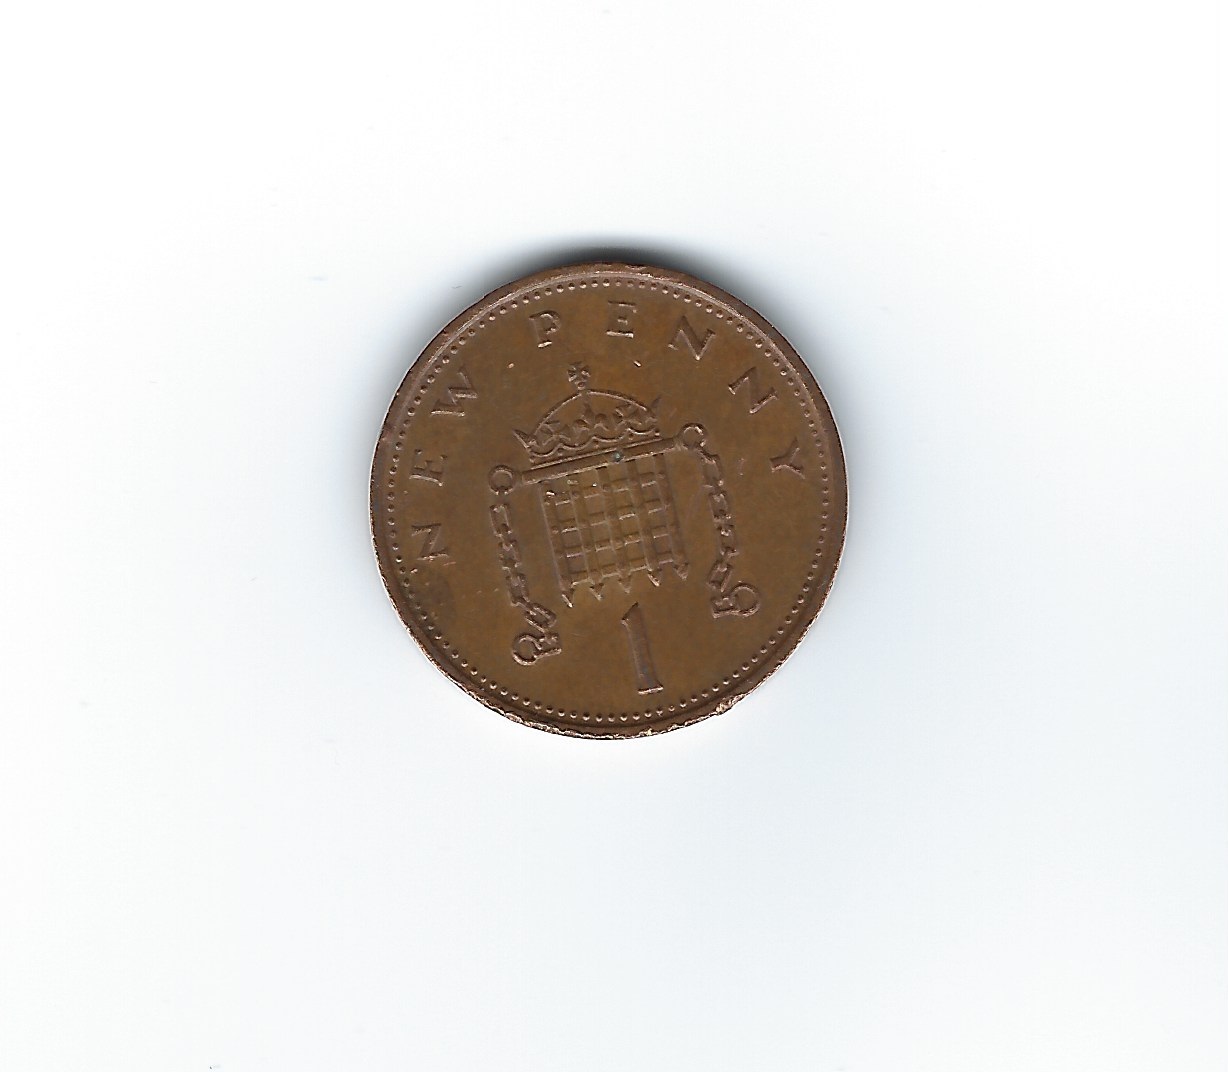  Großbritannien 1 Penny 1979   